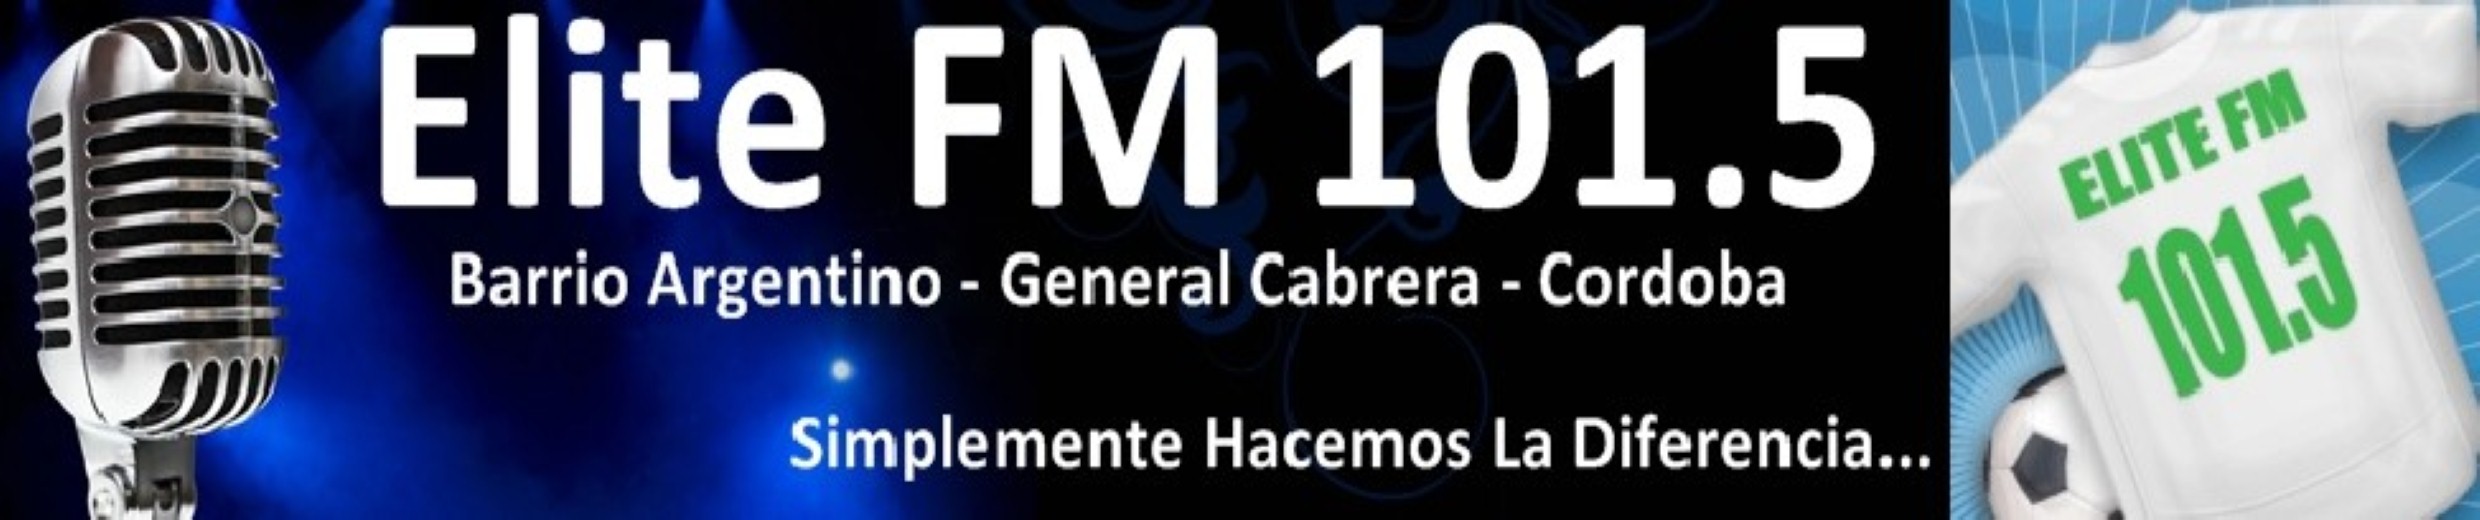 LRT 809 Elite FM 101.5 & Online - Barrio Argentino, General Cabrera, Cordoba, Argentina